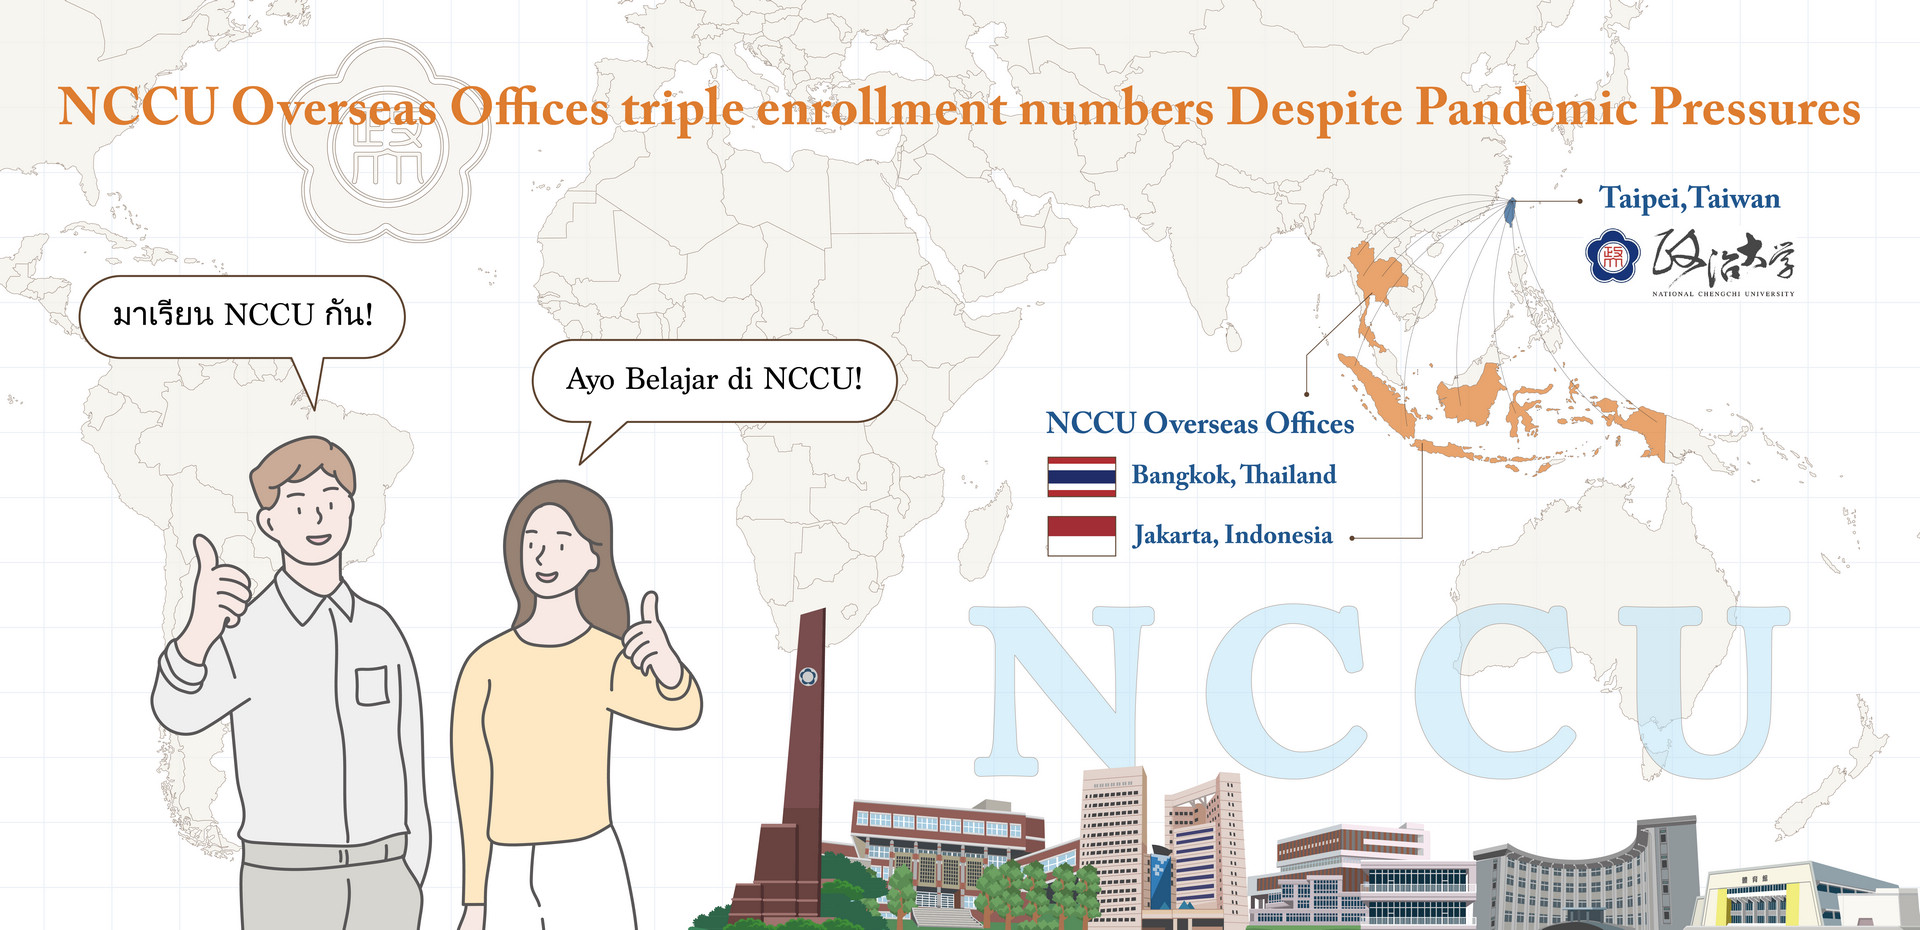 NCCU Overseas Offices Triple Enrollment Numbers Despite Pandemic Pressures